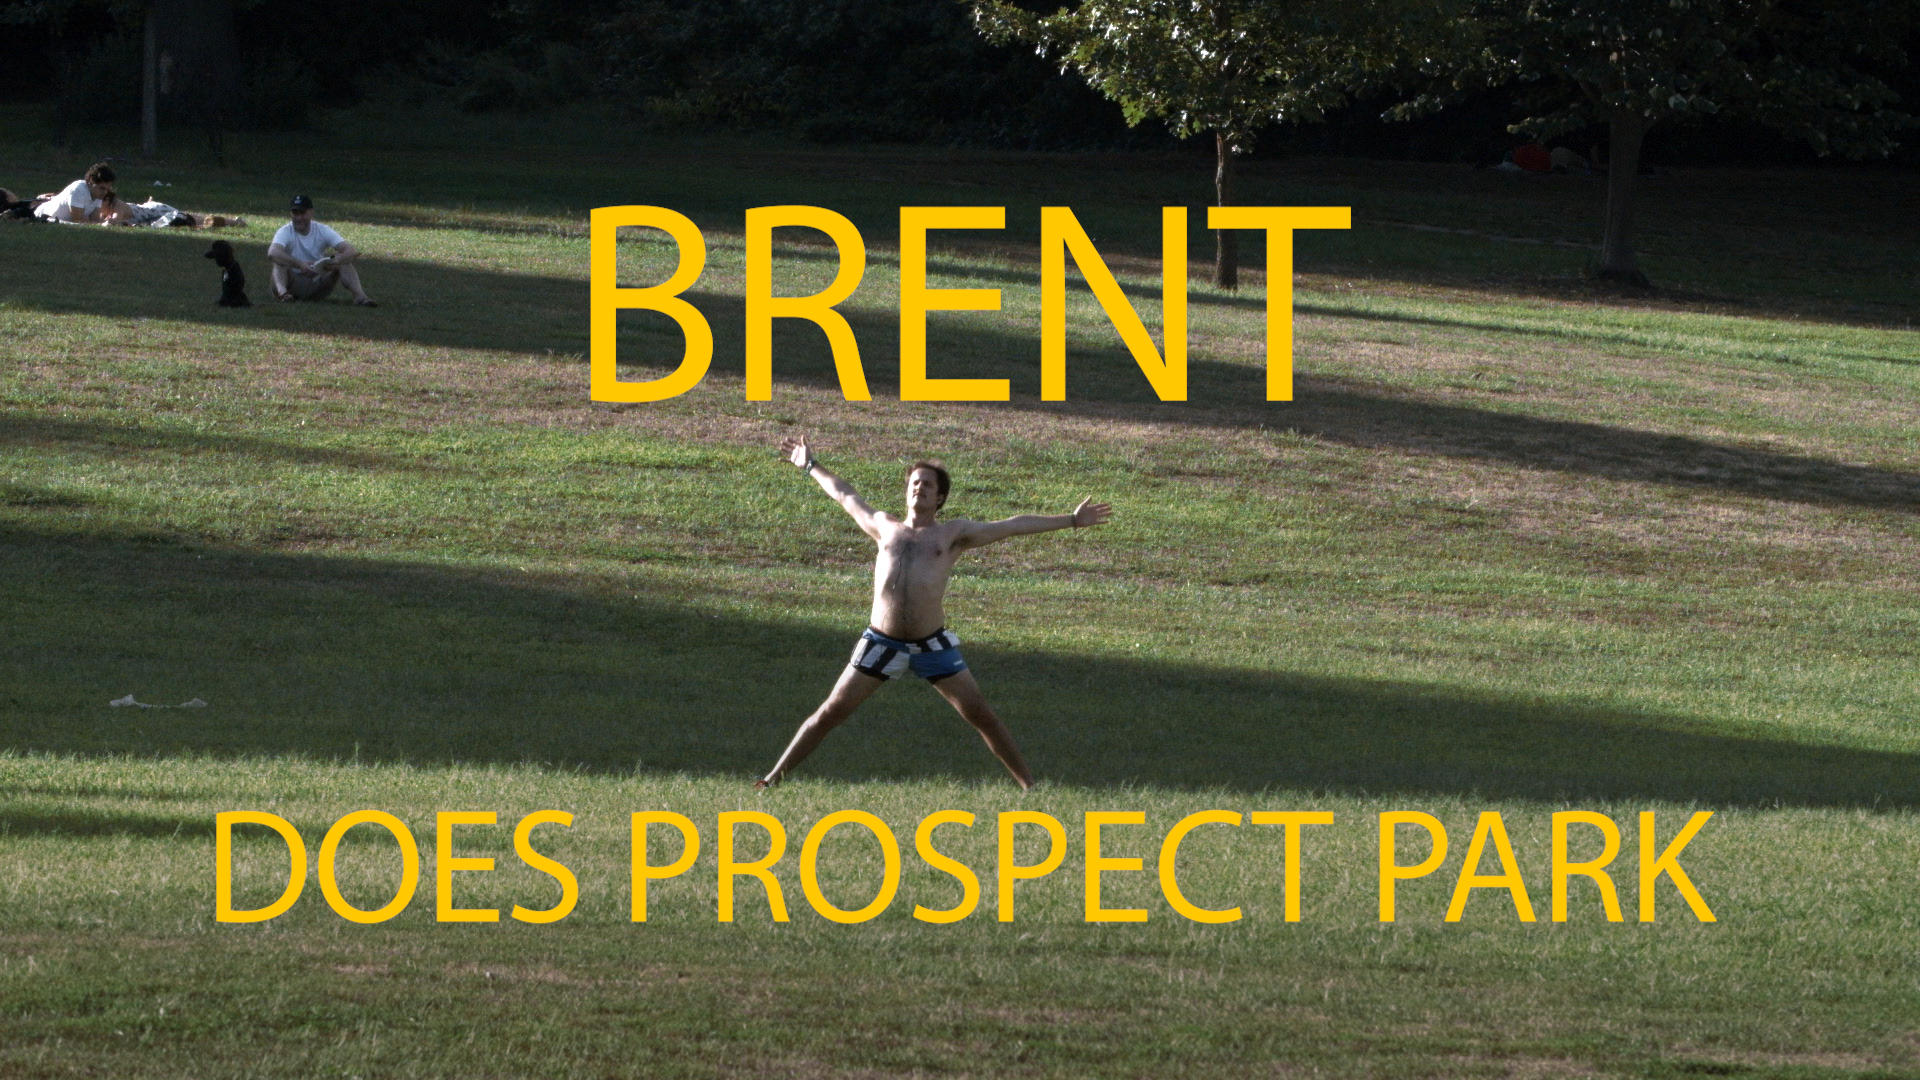 Brent Does Prospect Park|https://vimeo.com/391438348/76dce746e9